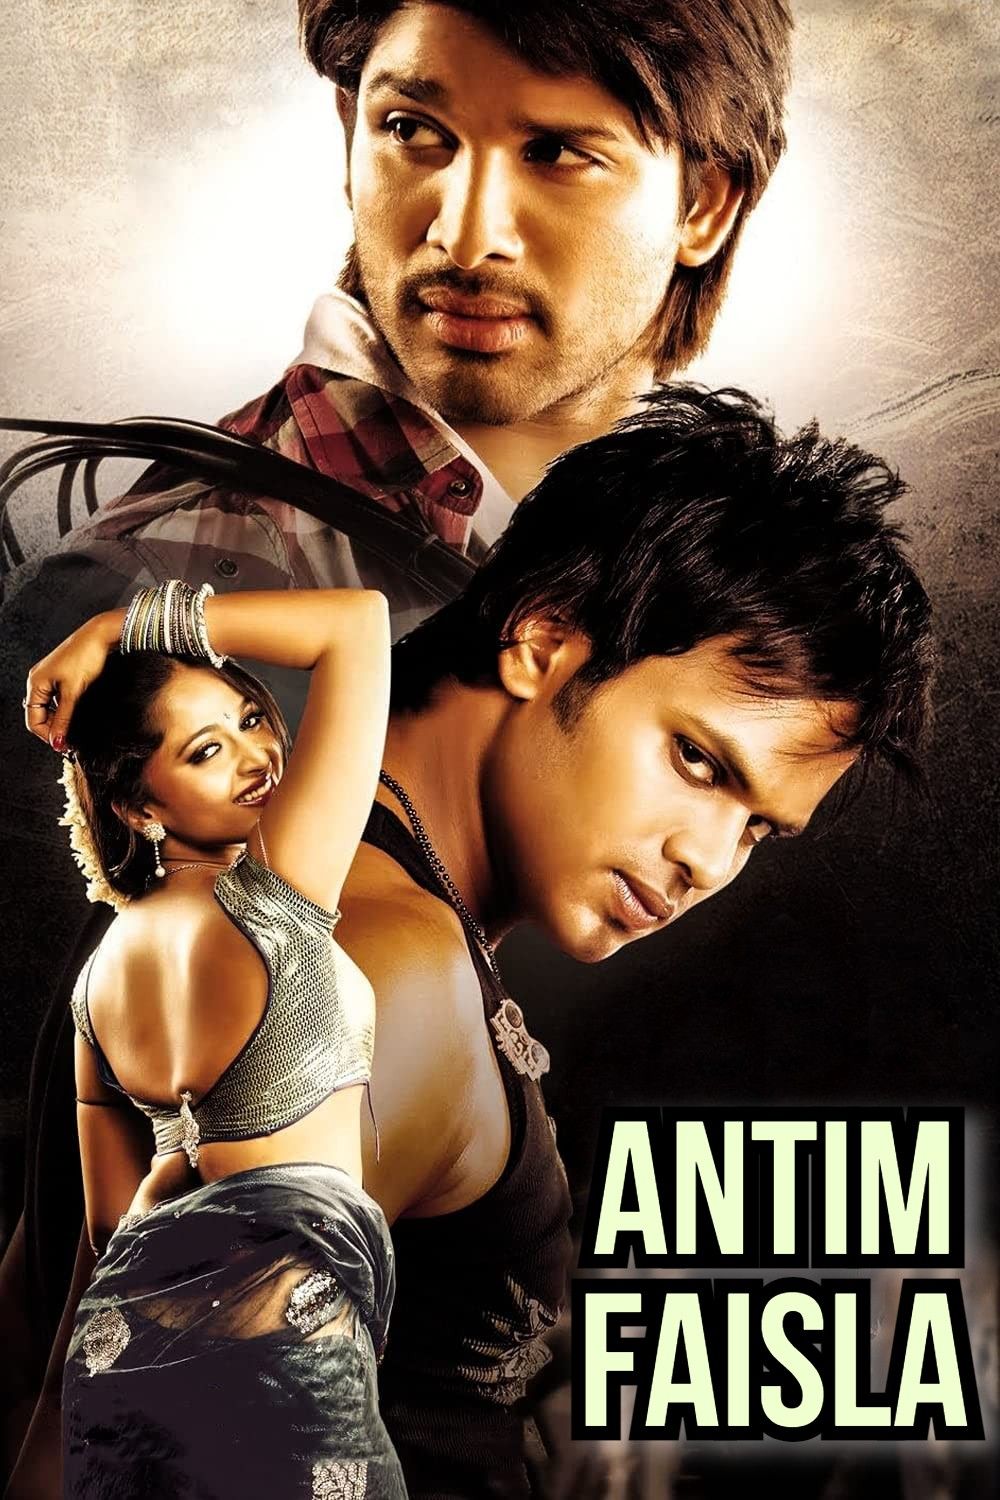 Antim Faisla (2018) Hindi Dubbed HDRip download full movie